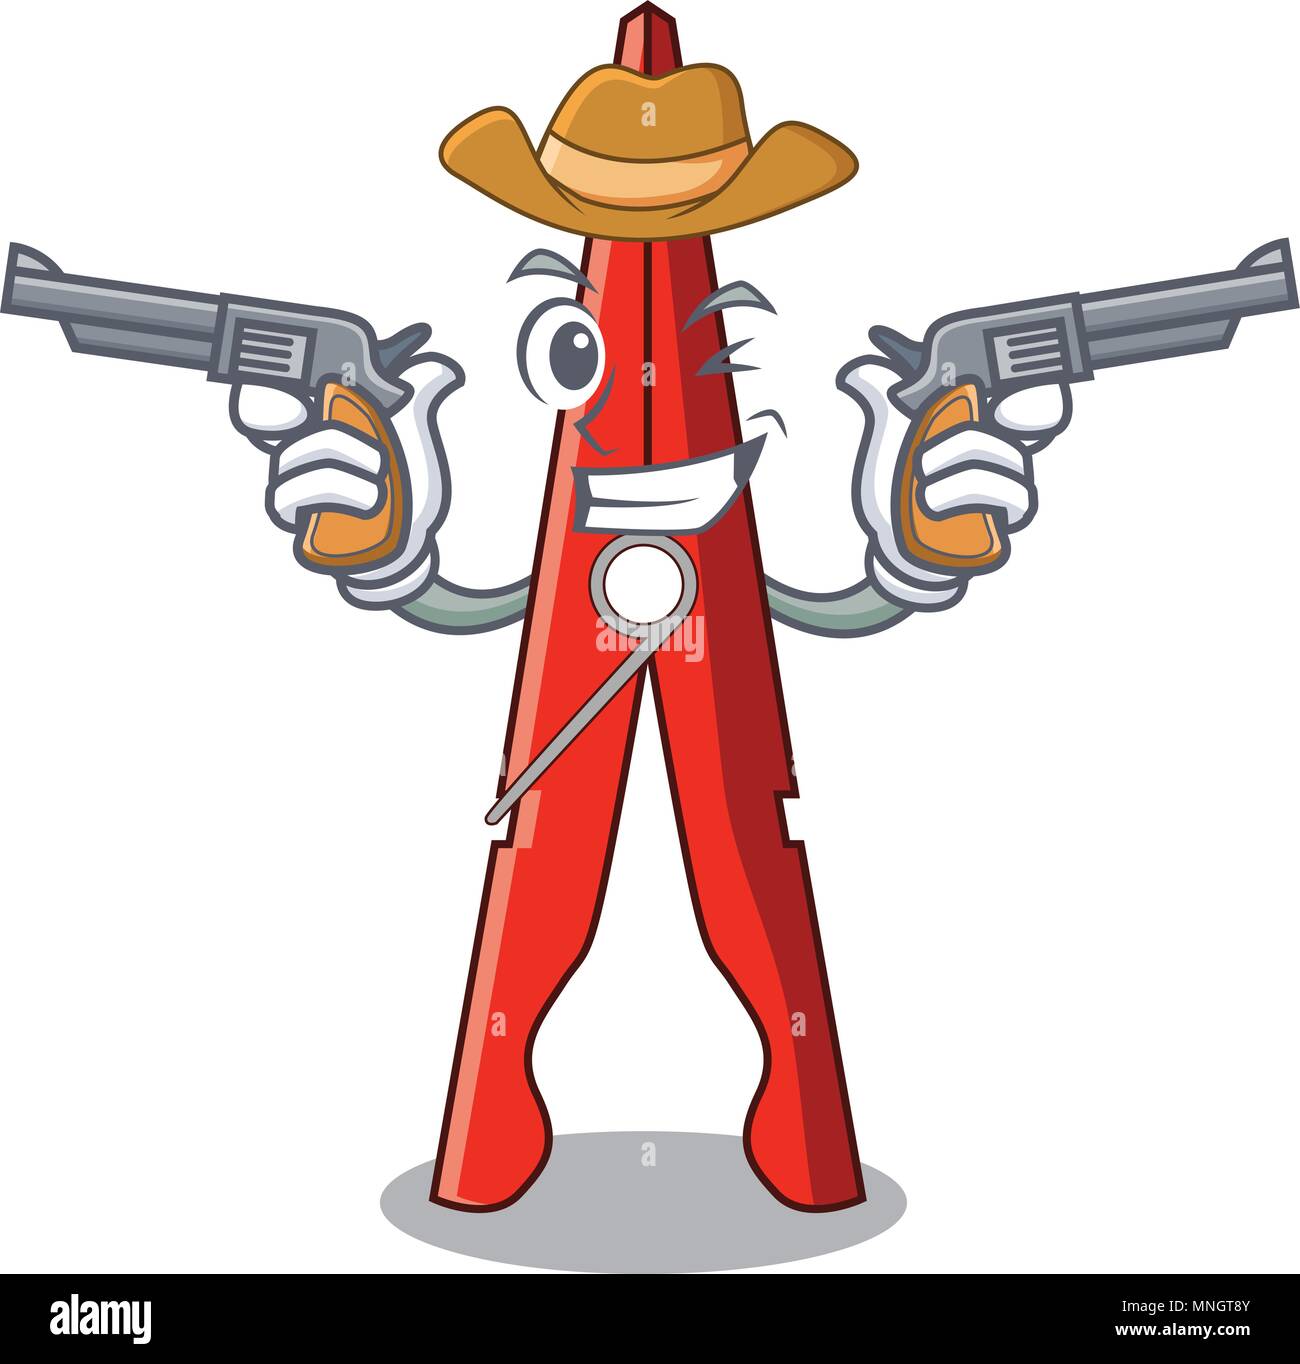 Cowboy clothes peg character cartoon vector illustration Stock Vector